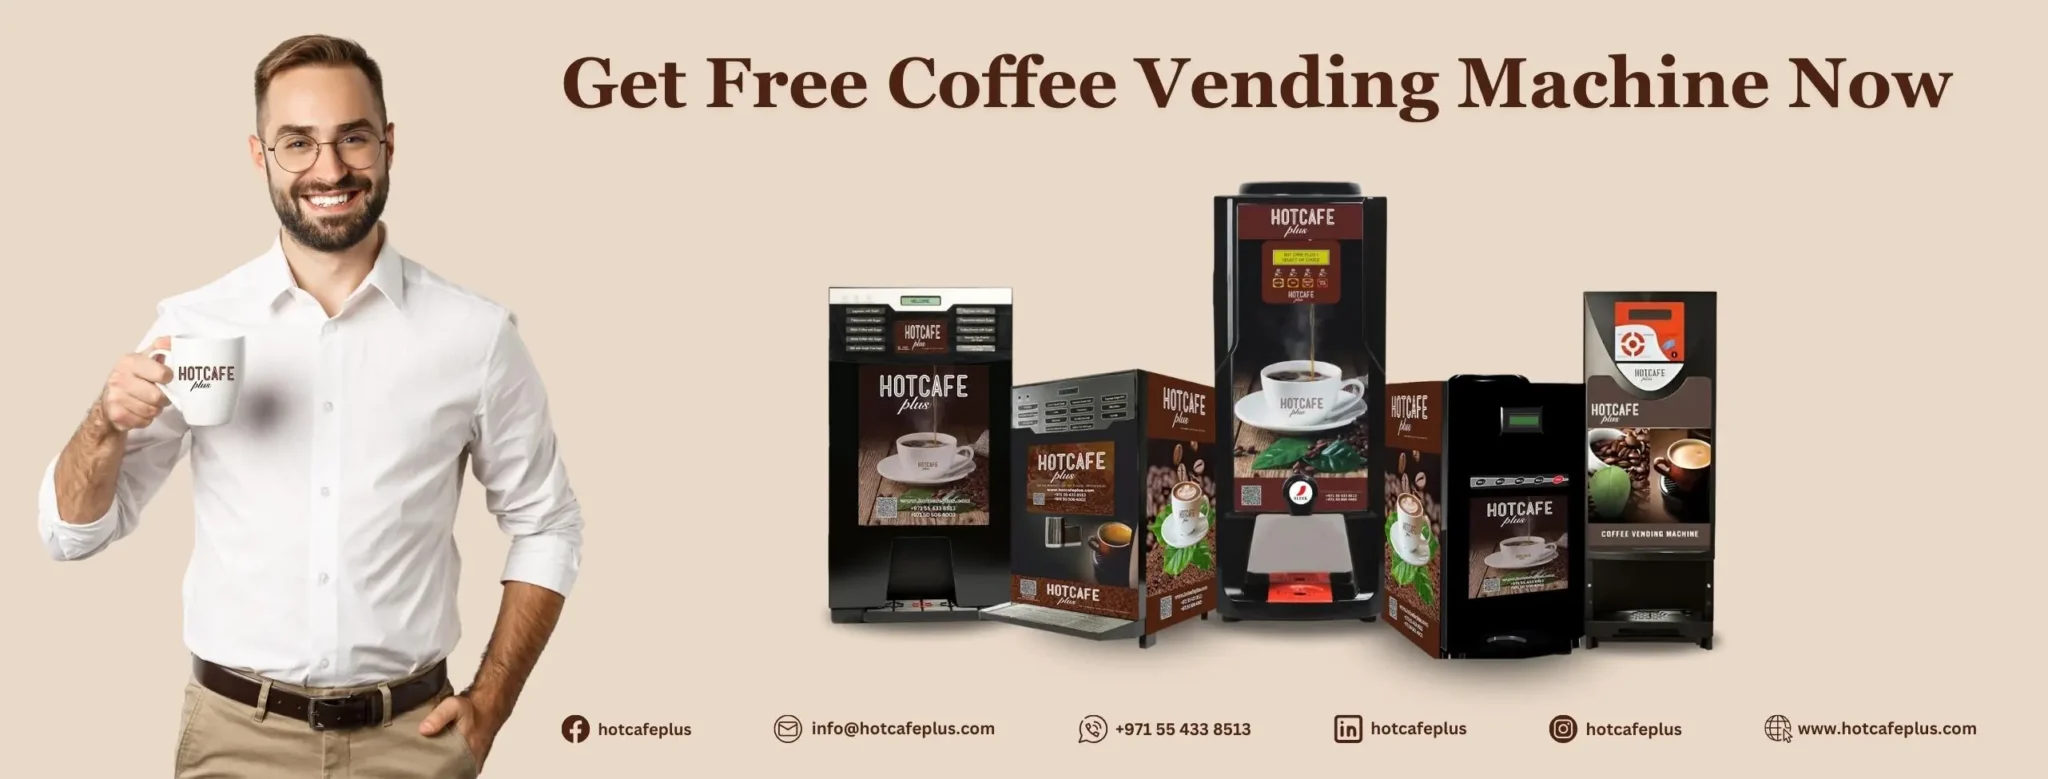 Get free coffee vending machine, coffee vending machine